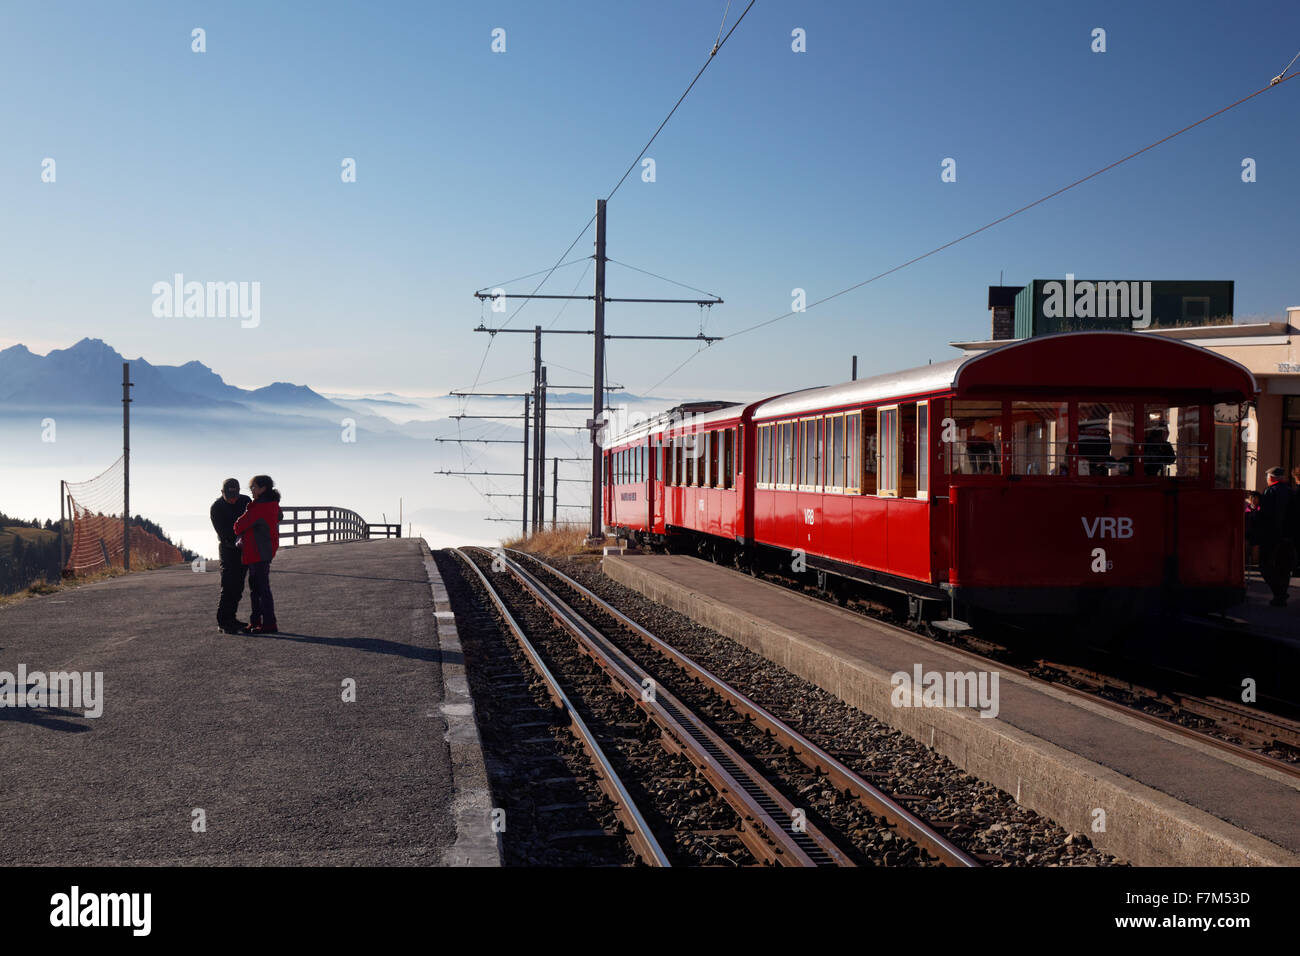 Rote Zahnrad Bahn Waggon am Gipfel des Mount Rigi, Schweiz, Europa  Stockfotografie - Alamy